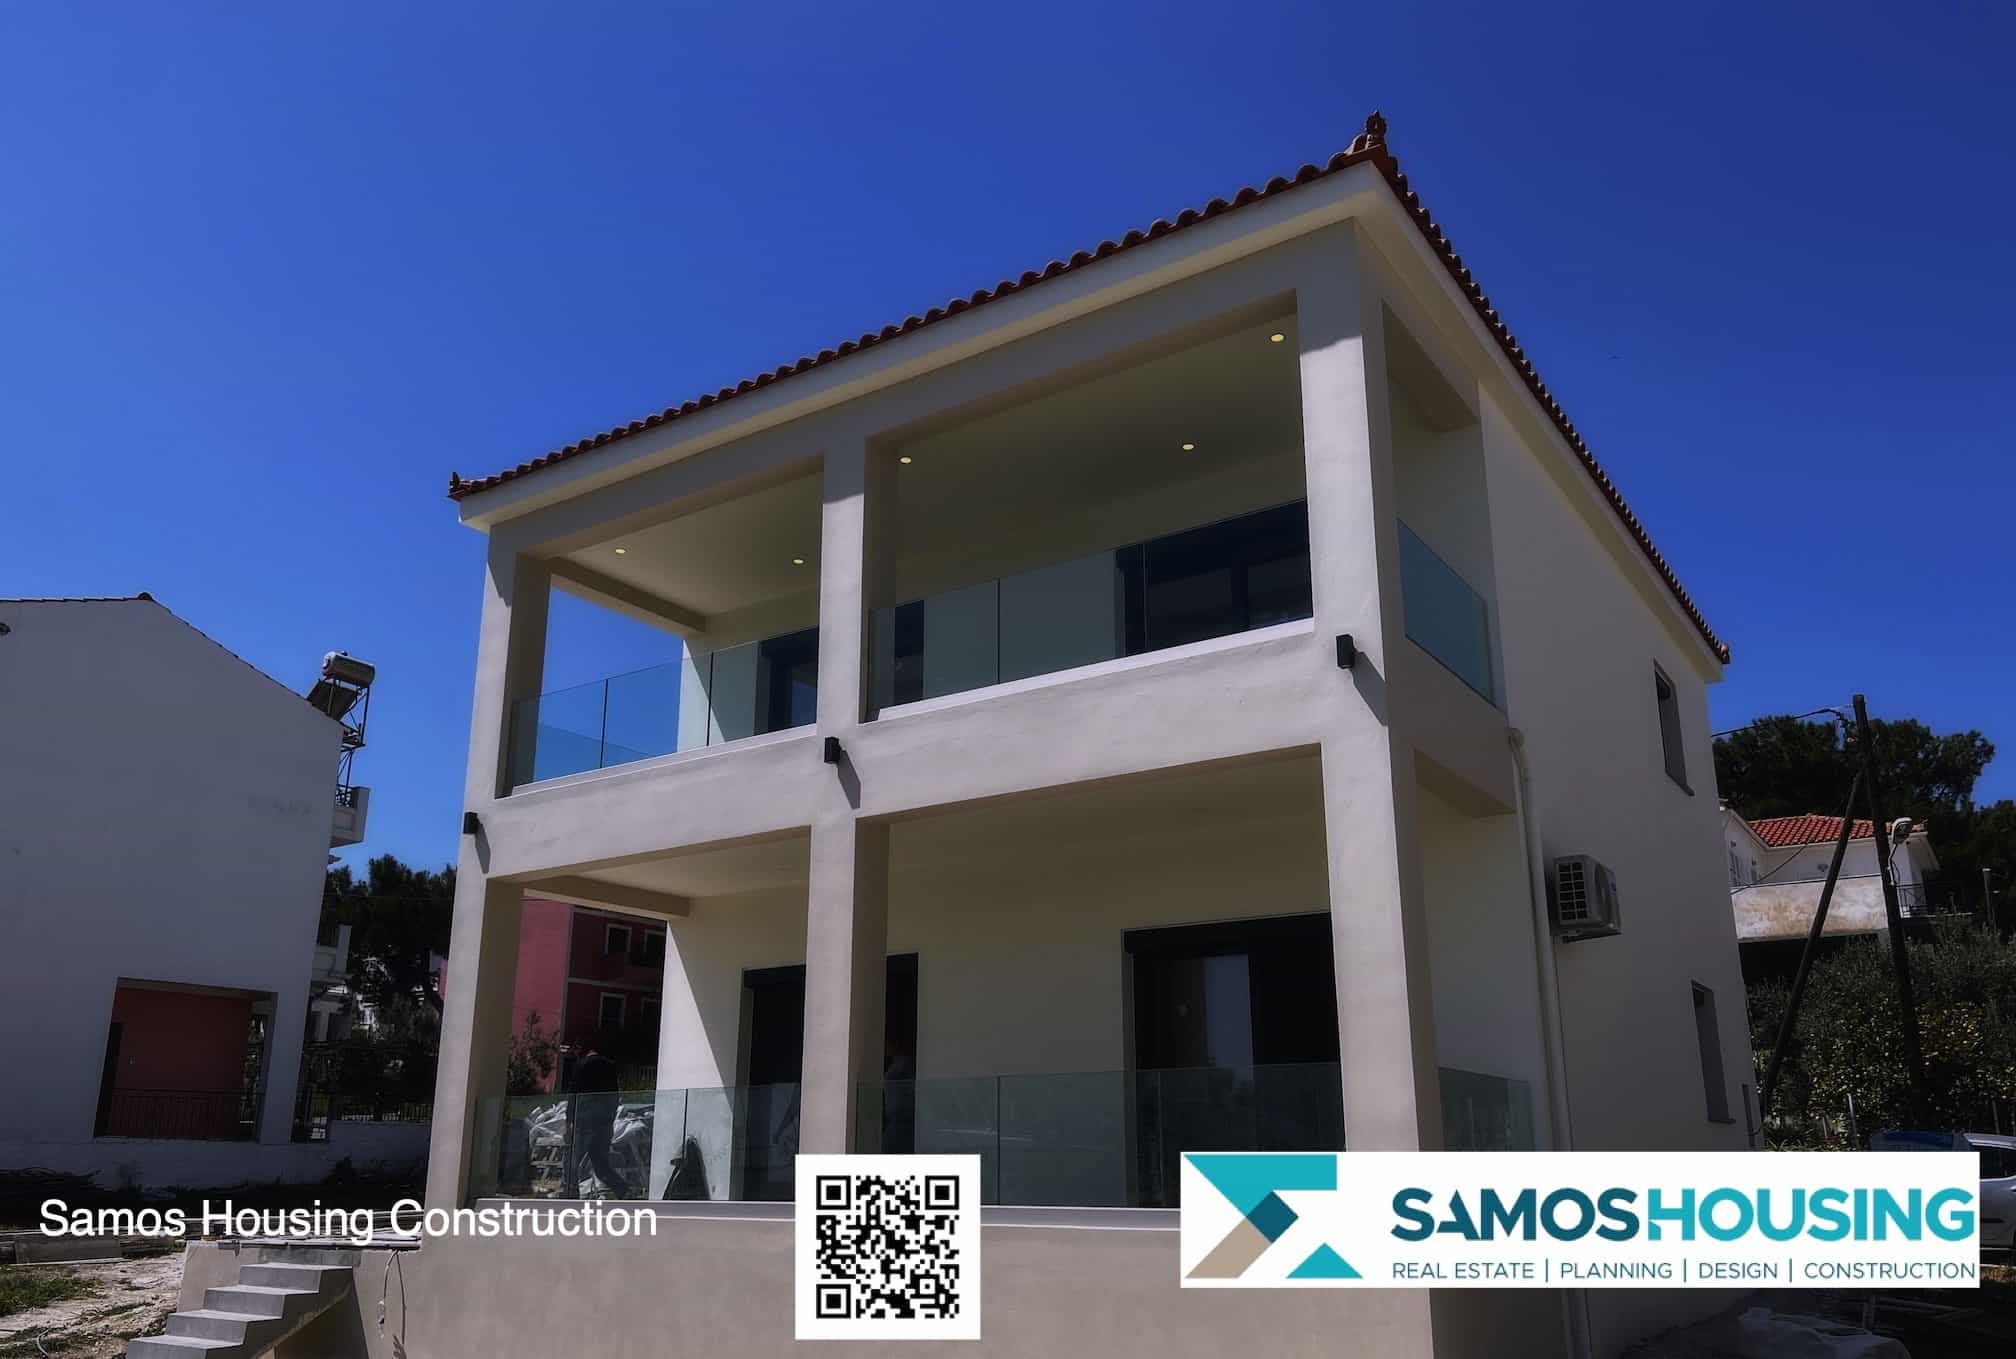 Samos Housing Construction